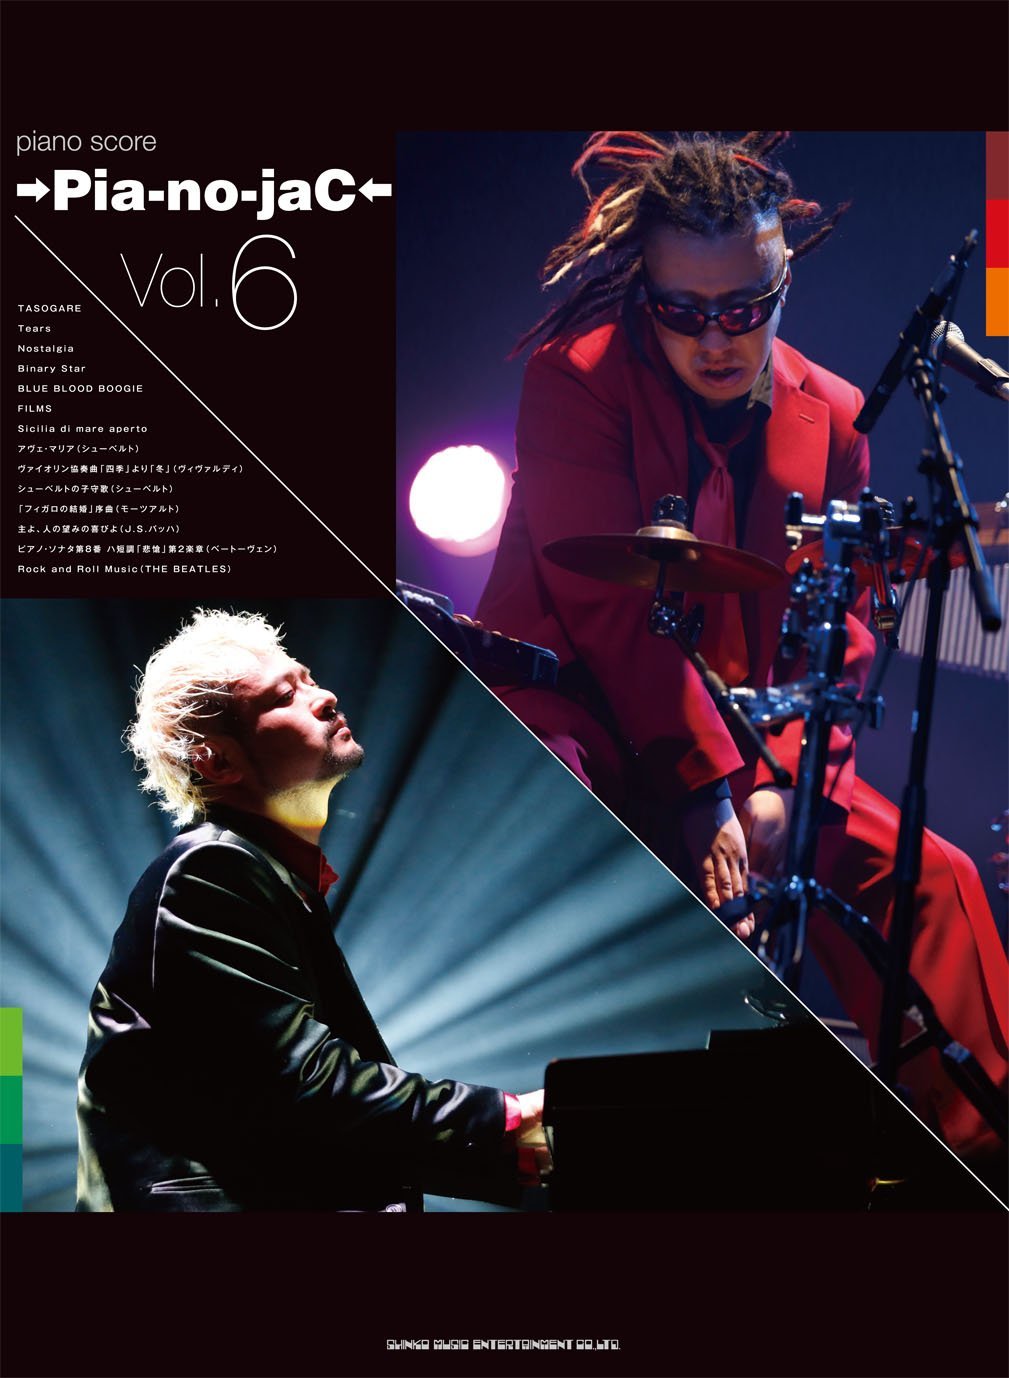 Pia-no-jaC Vol.6 Piano Score Sheet Music Book